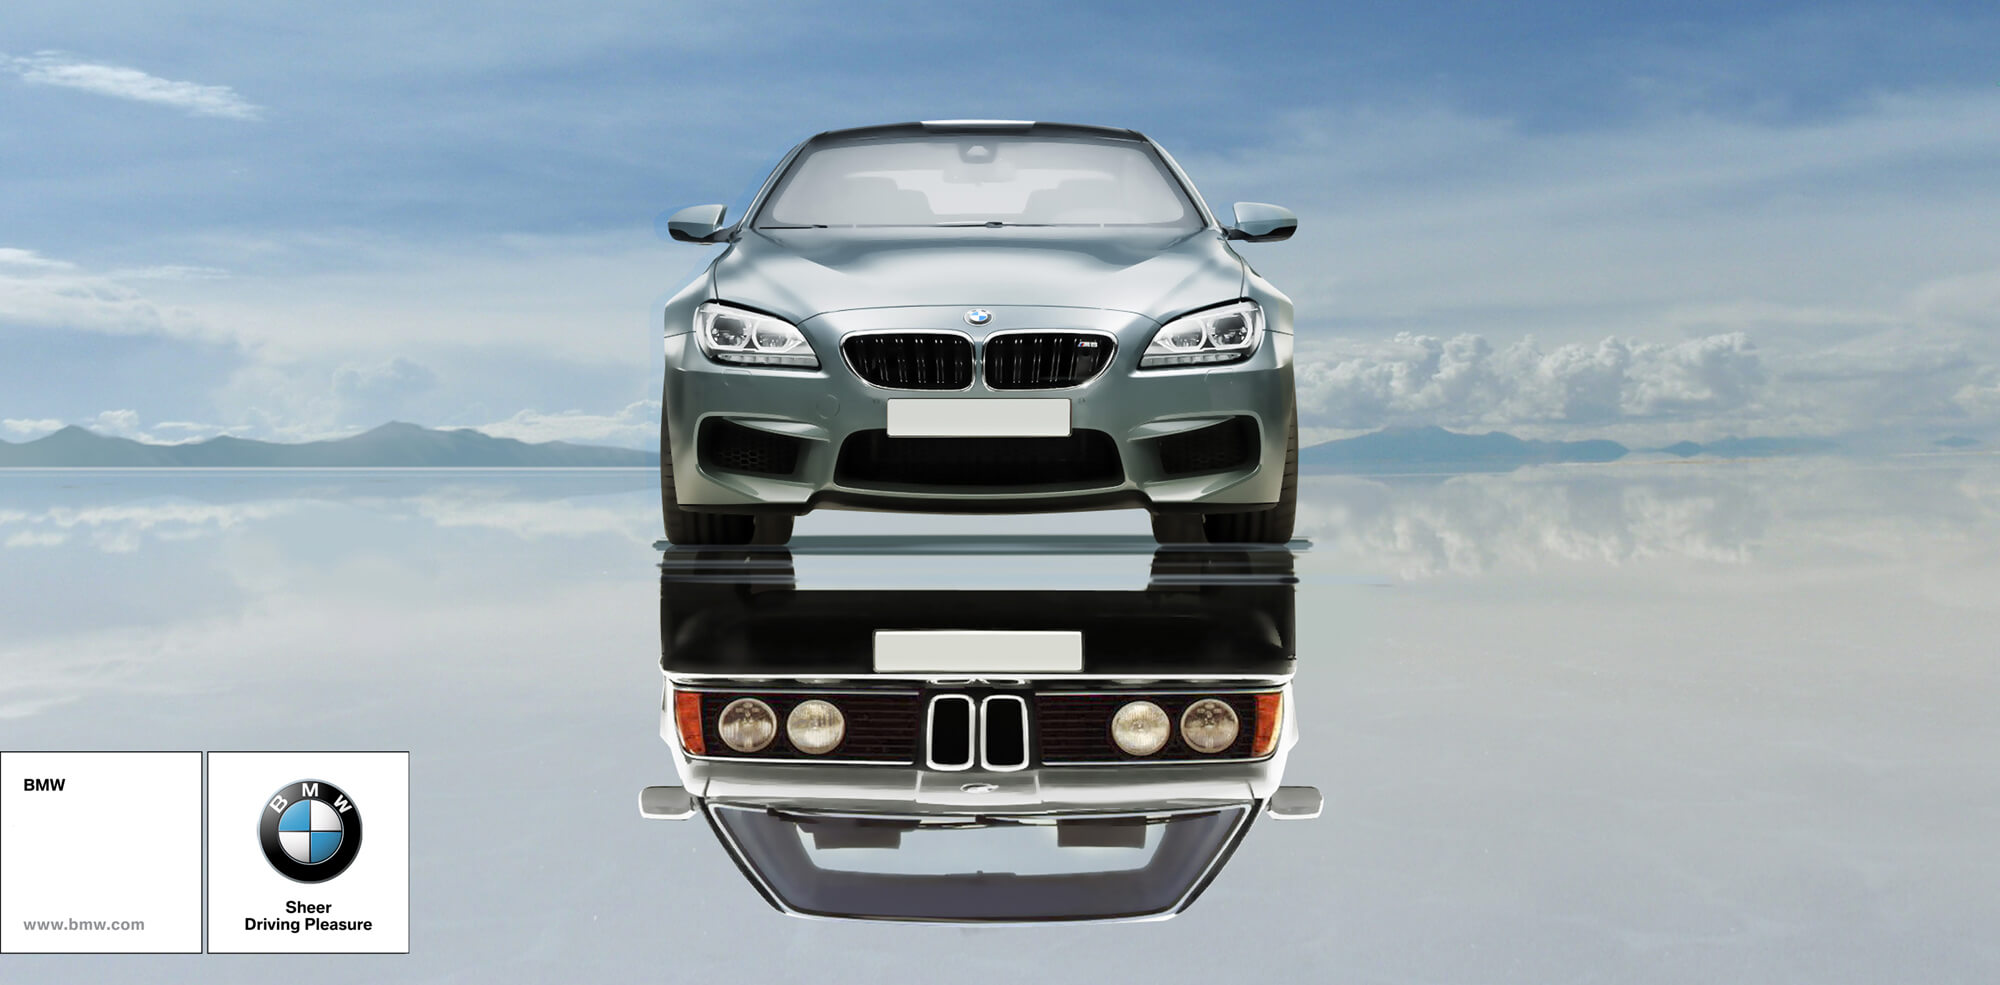 BMW_Print_Ads_1.jpg